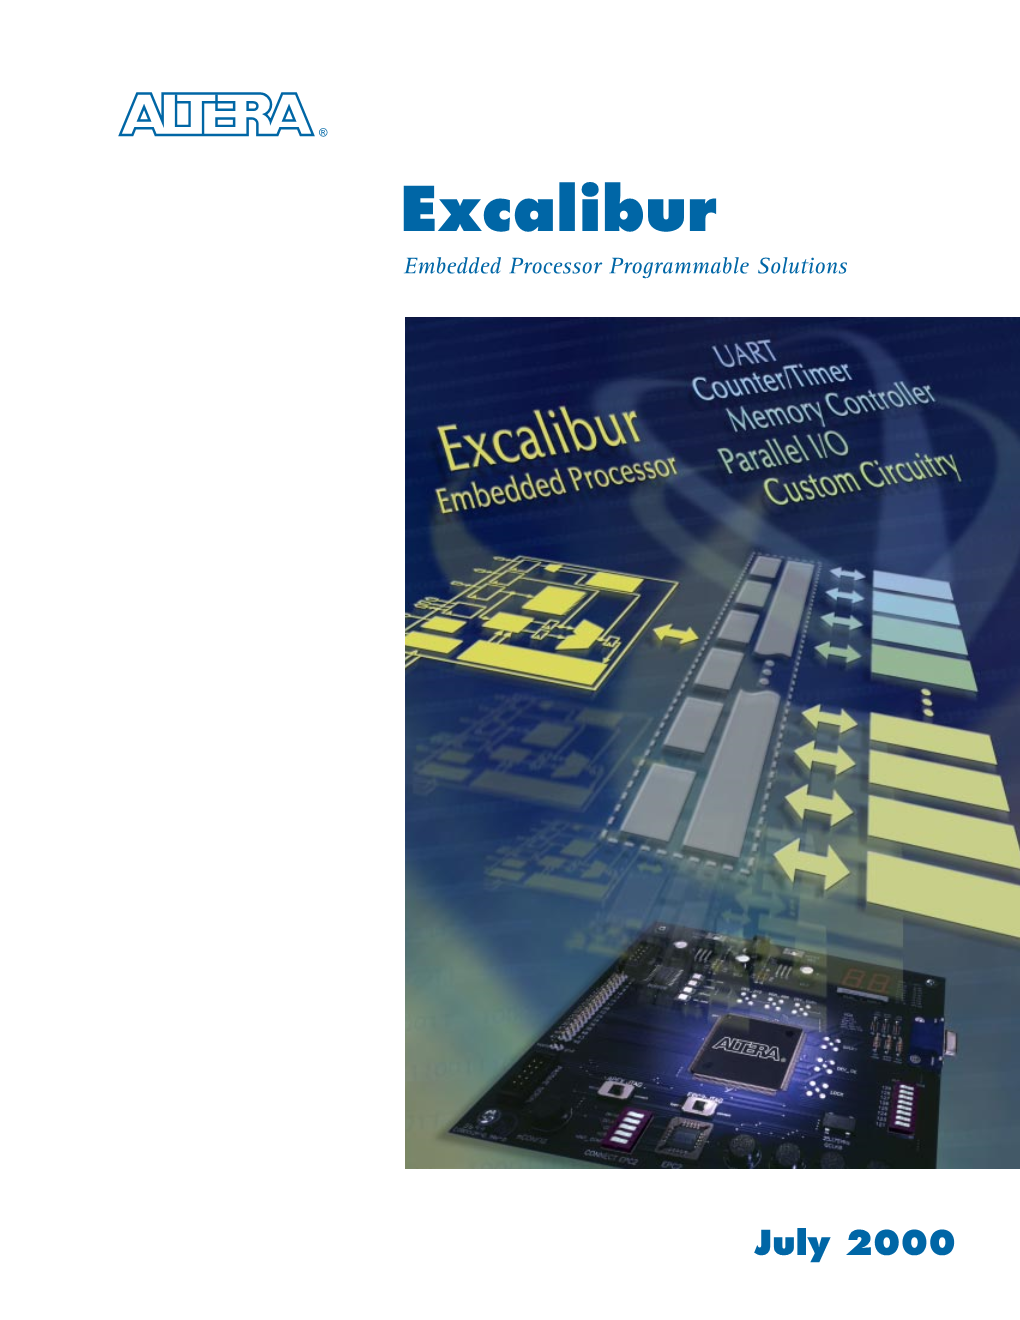 Excalibur Embedded Processor Programmable Solutions Brochure